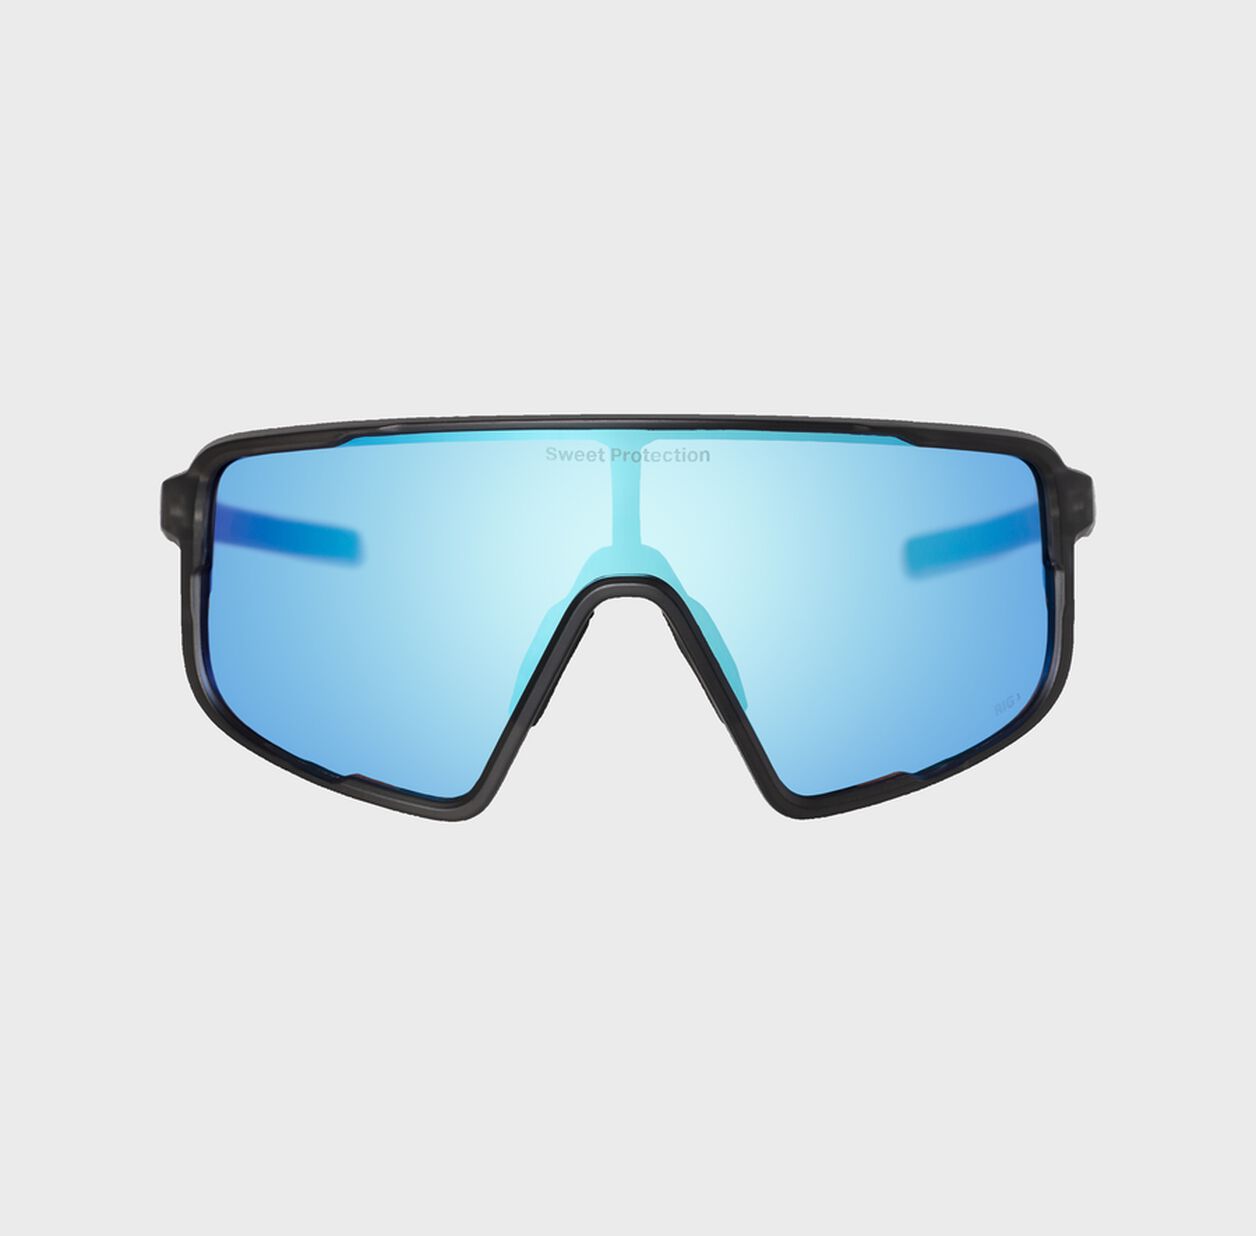 Sweet Protection - Sunglasses Memento RIG Reflect Matte Crystal Black Sunglasses Sweet Protection 